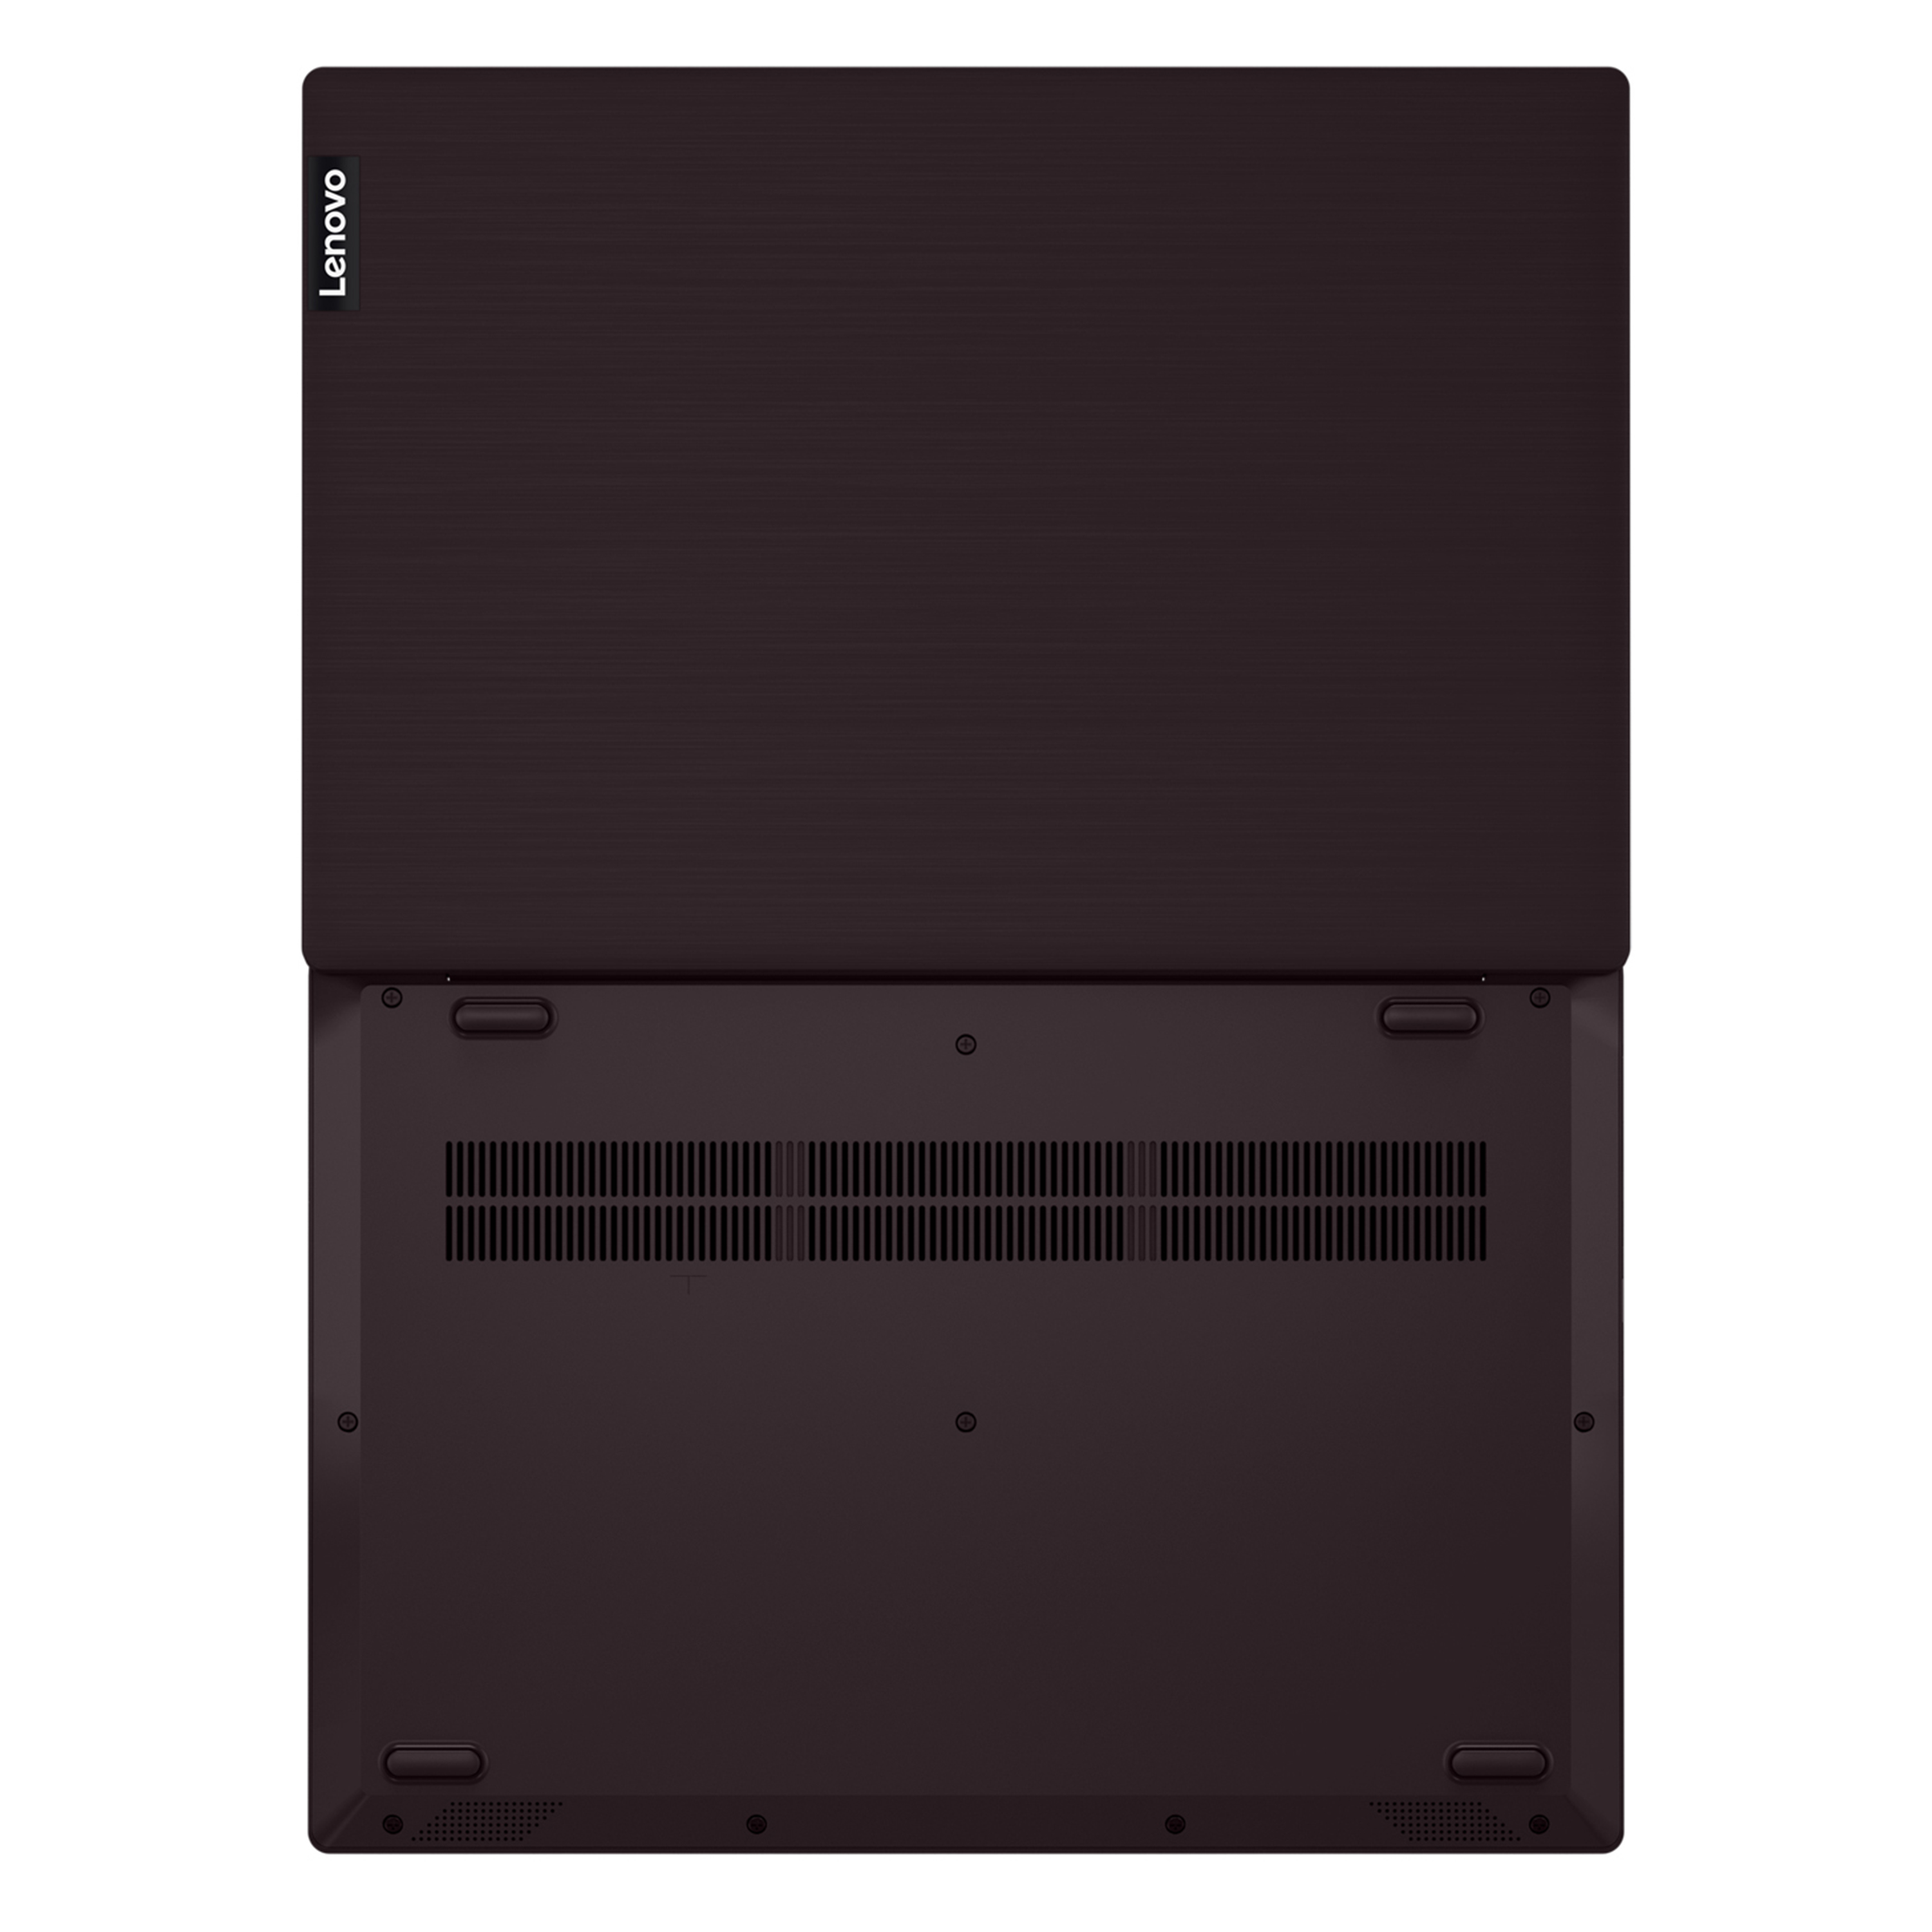 Lenovo ideapad S145 15.6" Laptop, Intel Celeron 4205U Dual-Core Processor, 4GB Memory, 128GB Solid State Drive, Windows 10 - Dark Orchid - 81MV00MAUS - image 3 of 14